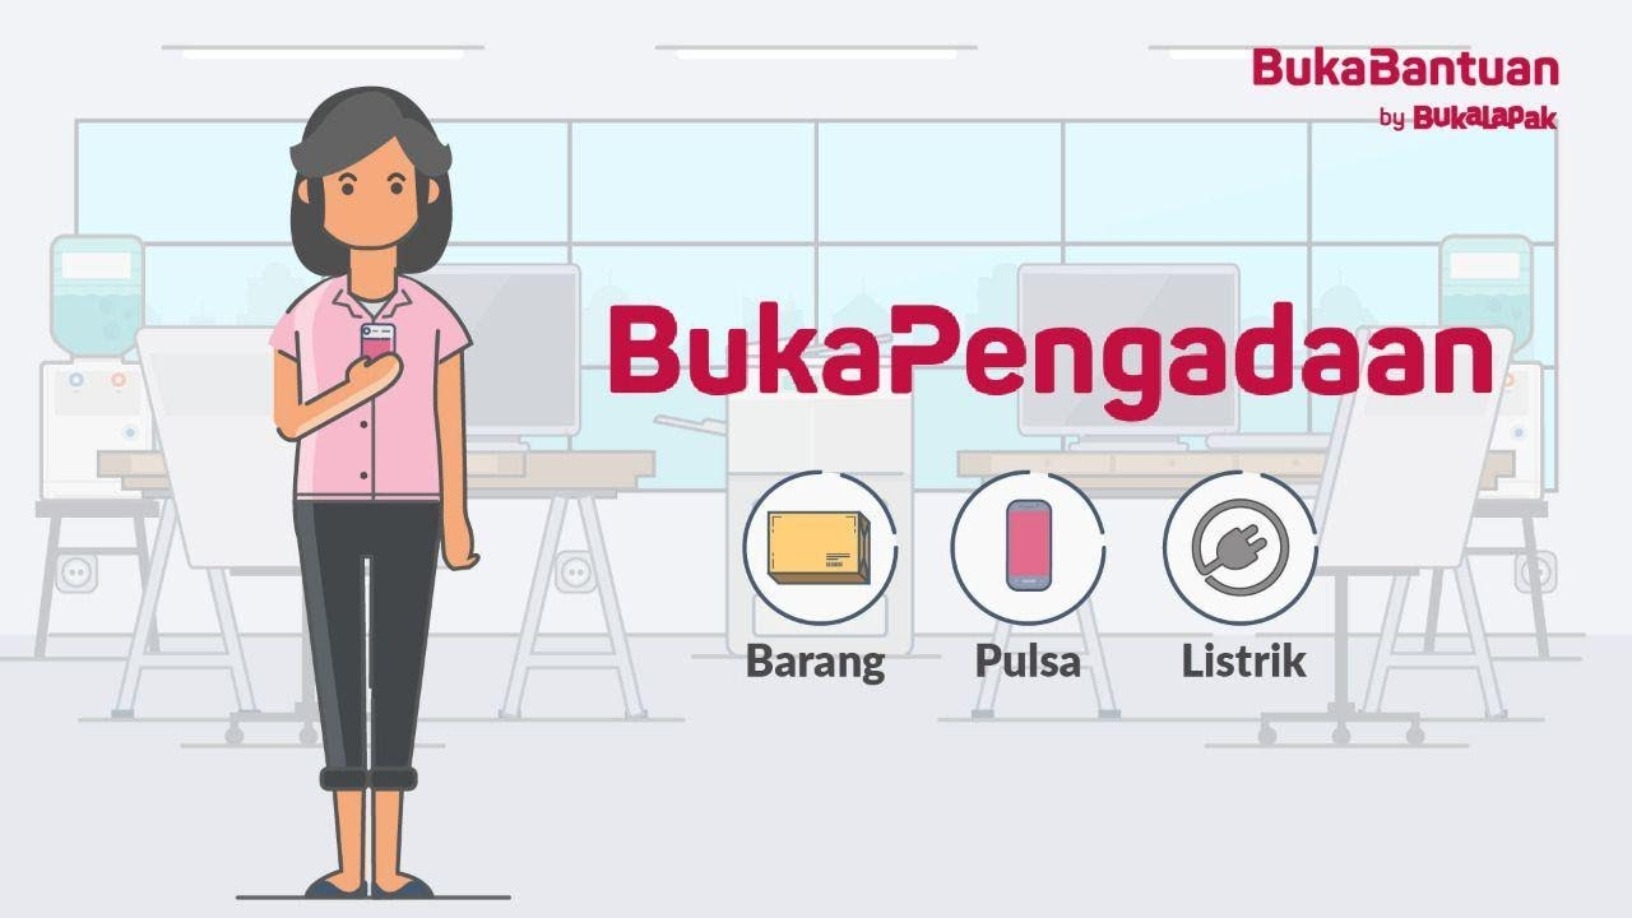 BukaPengadaan: The B2B procurement service from e-commerce giant Bukalapak